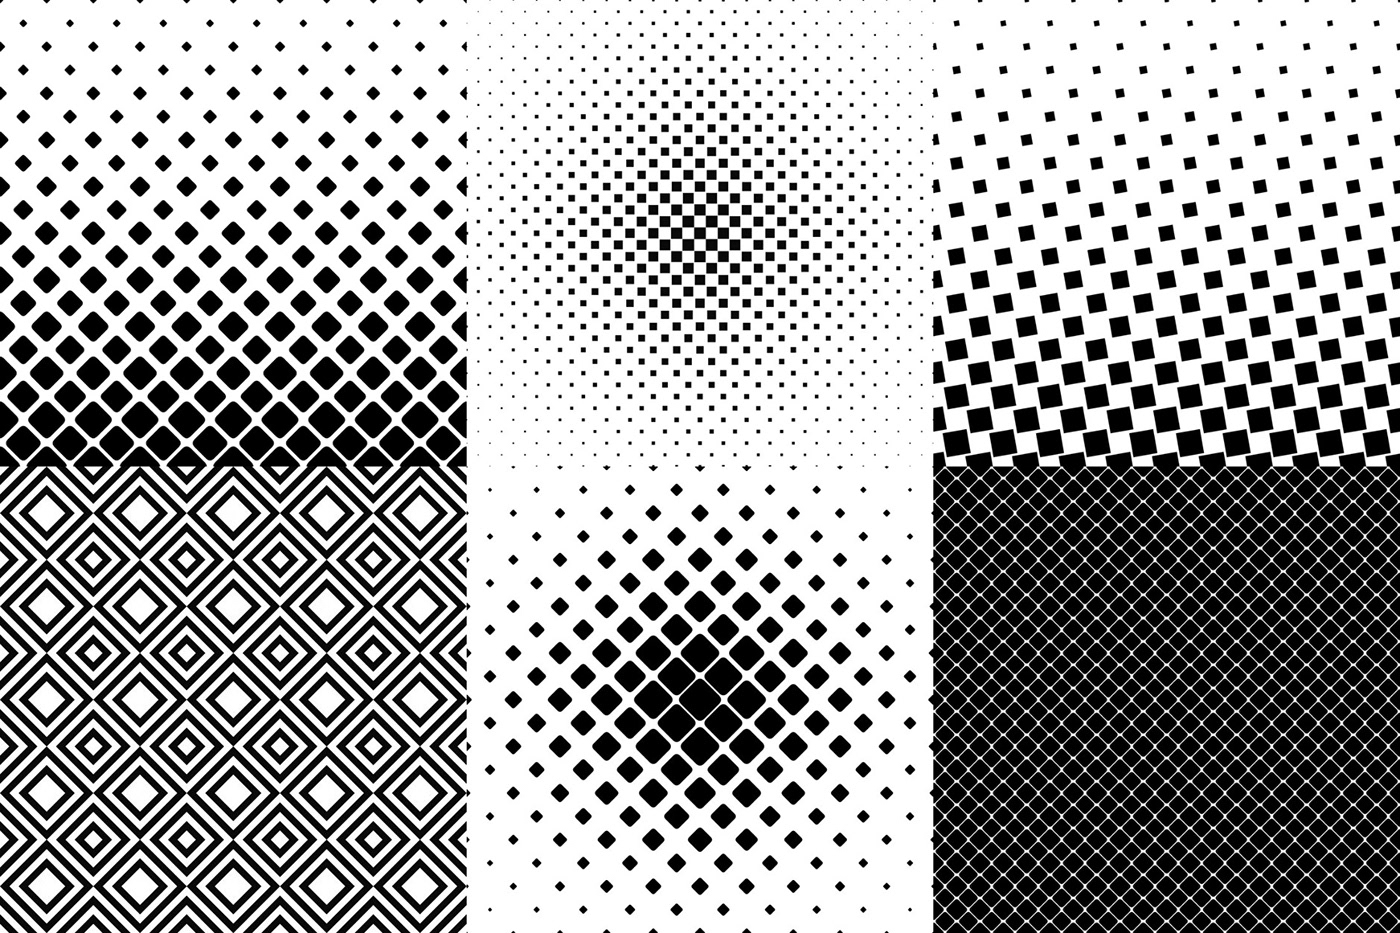 25 free monochrome square patterns